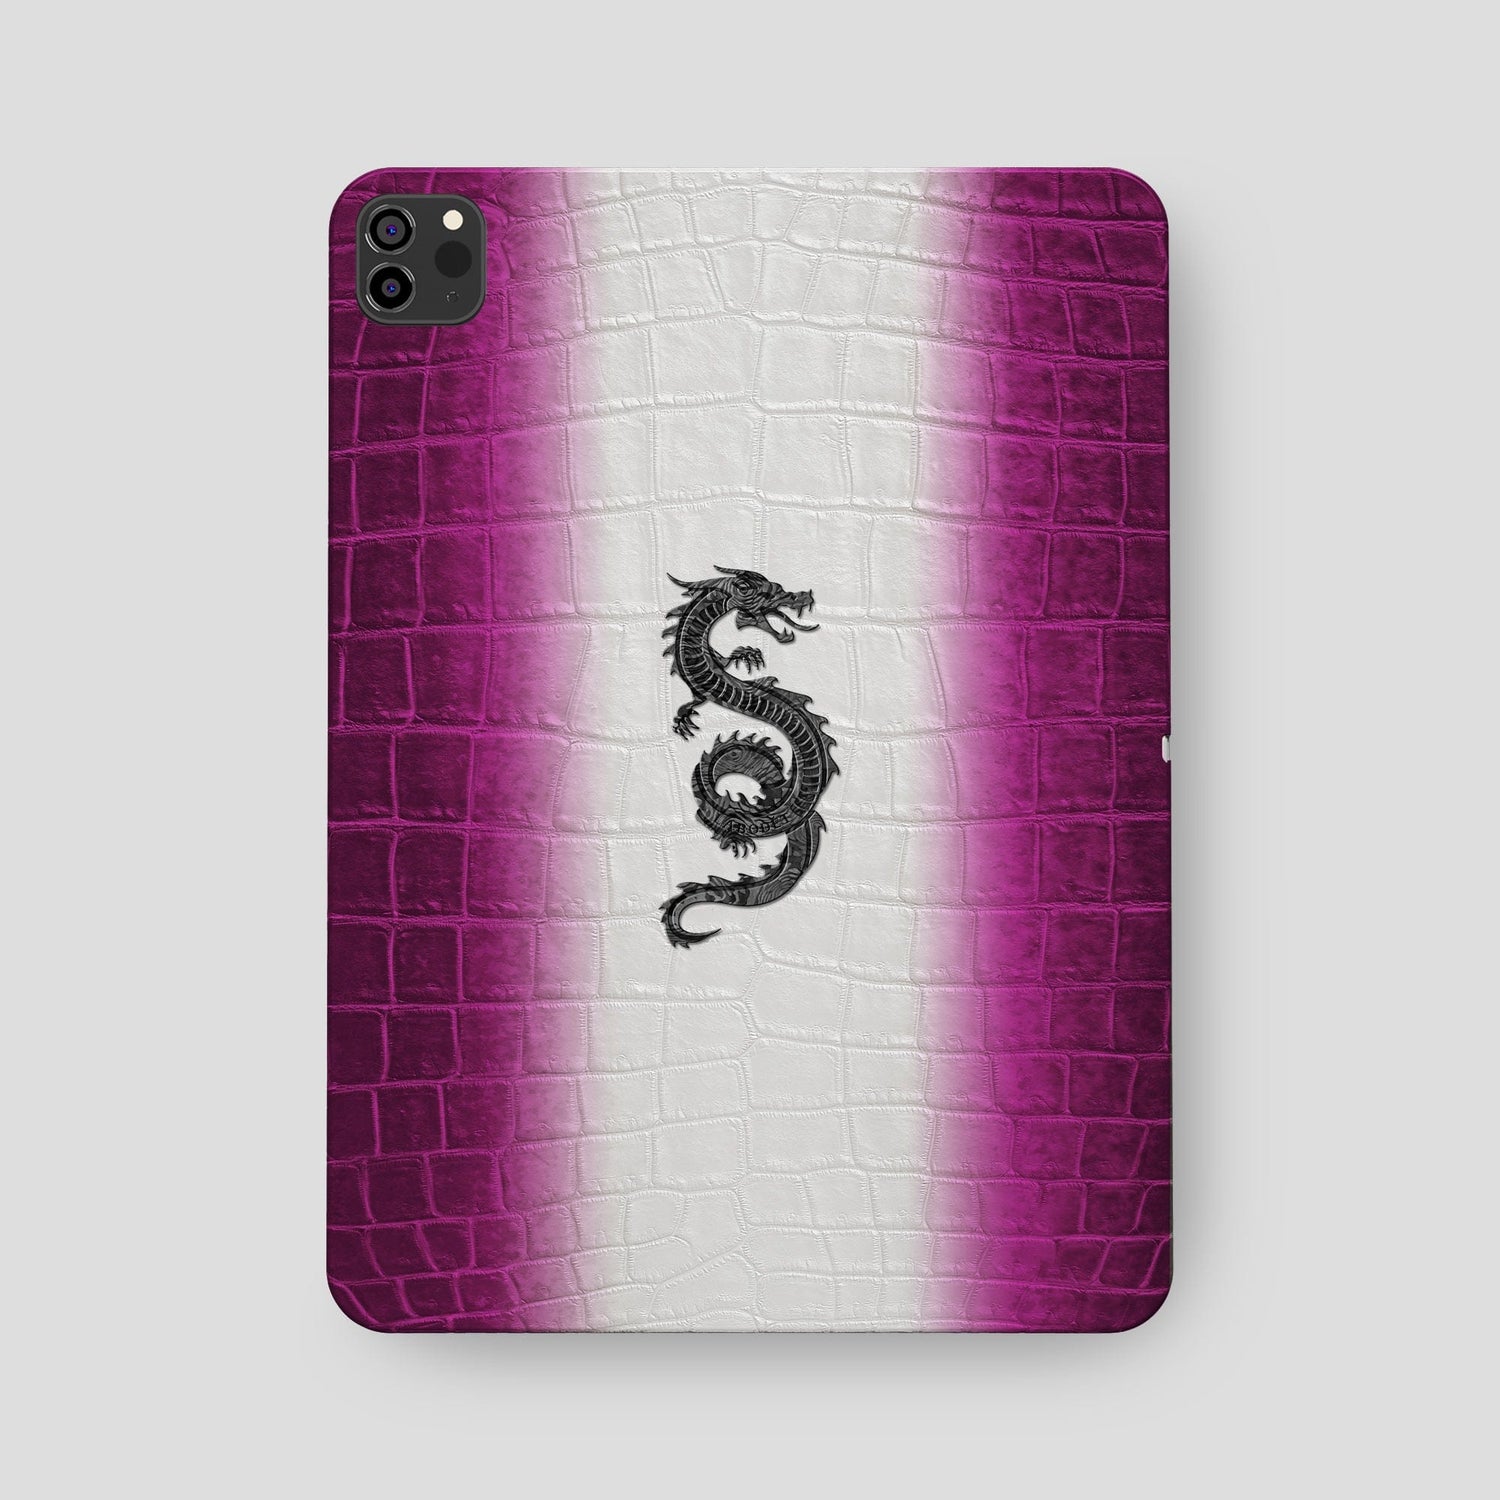 Alligator Leather iPad Mini Case with Dragon